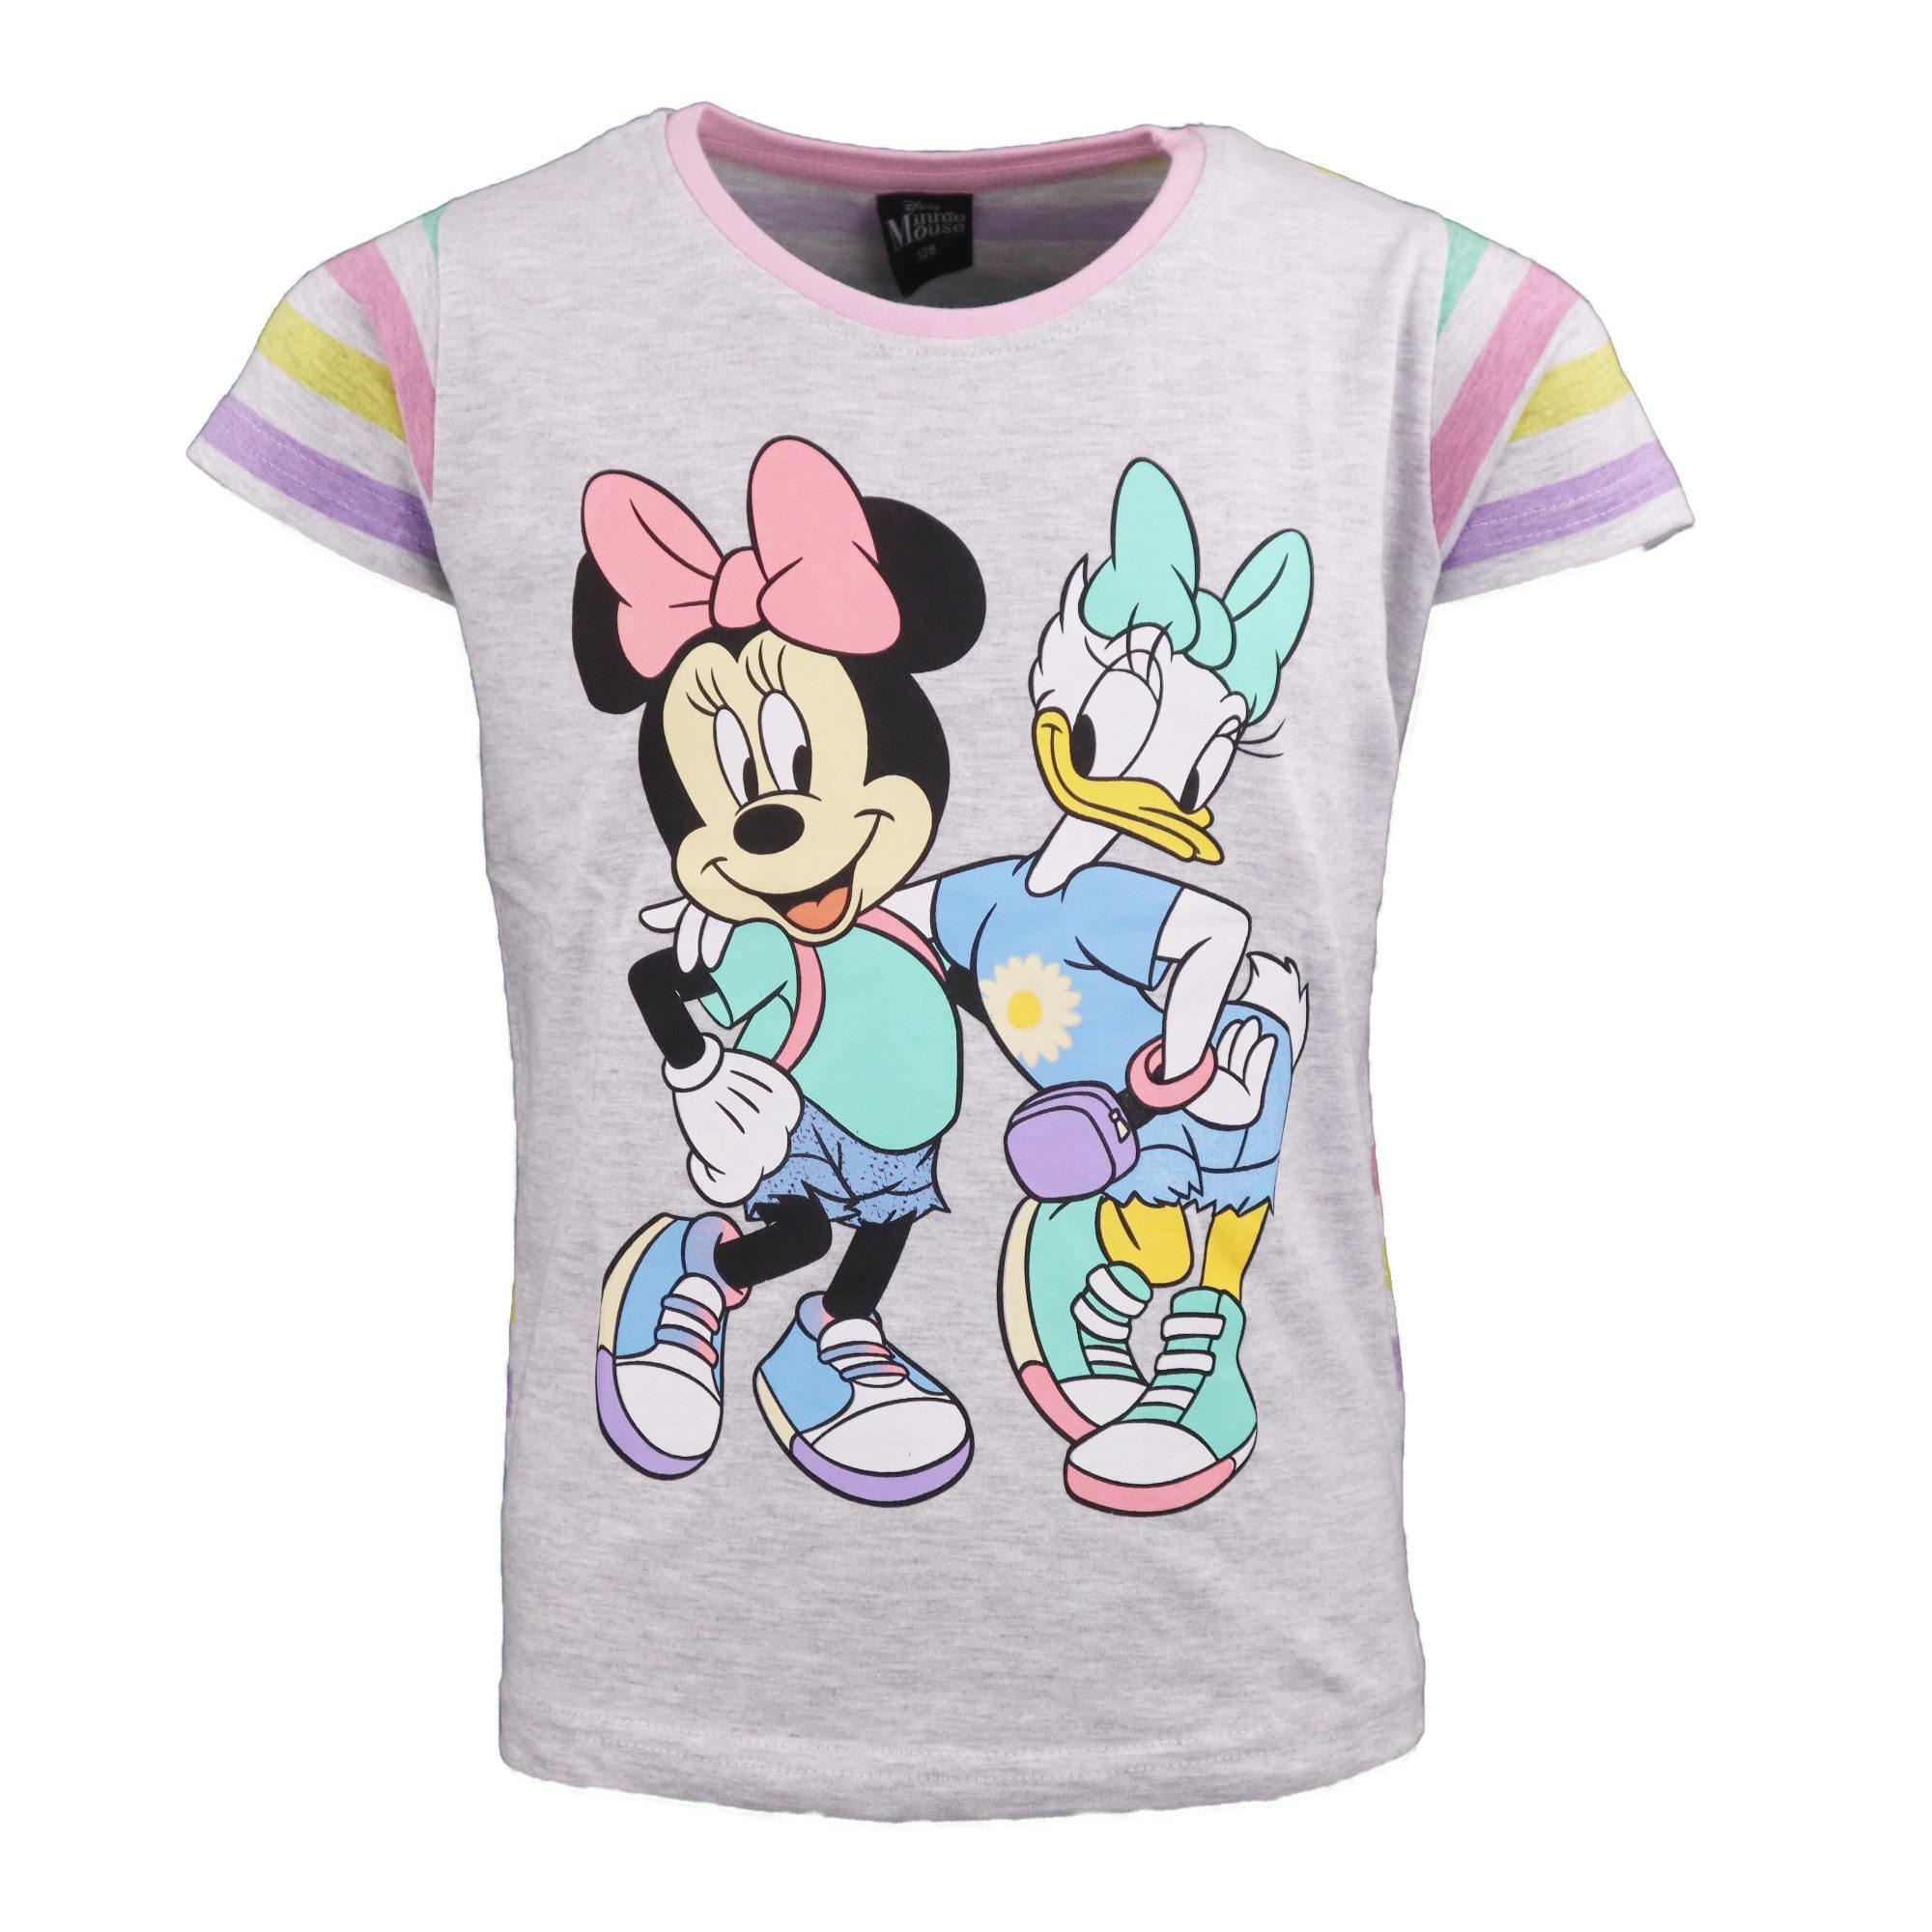 Disney Minnie Mouse Print-Shirt Minnie Maus und Daisy Duck Mädchen Kinder T-Shirt Gr. 104 bis 134 Grau